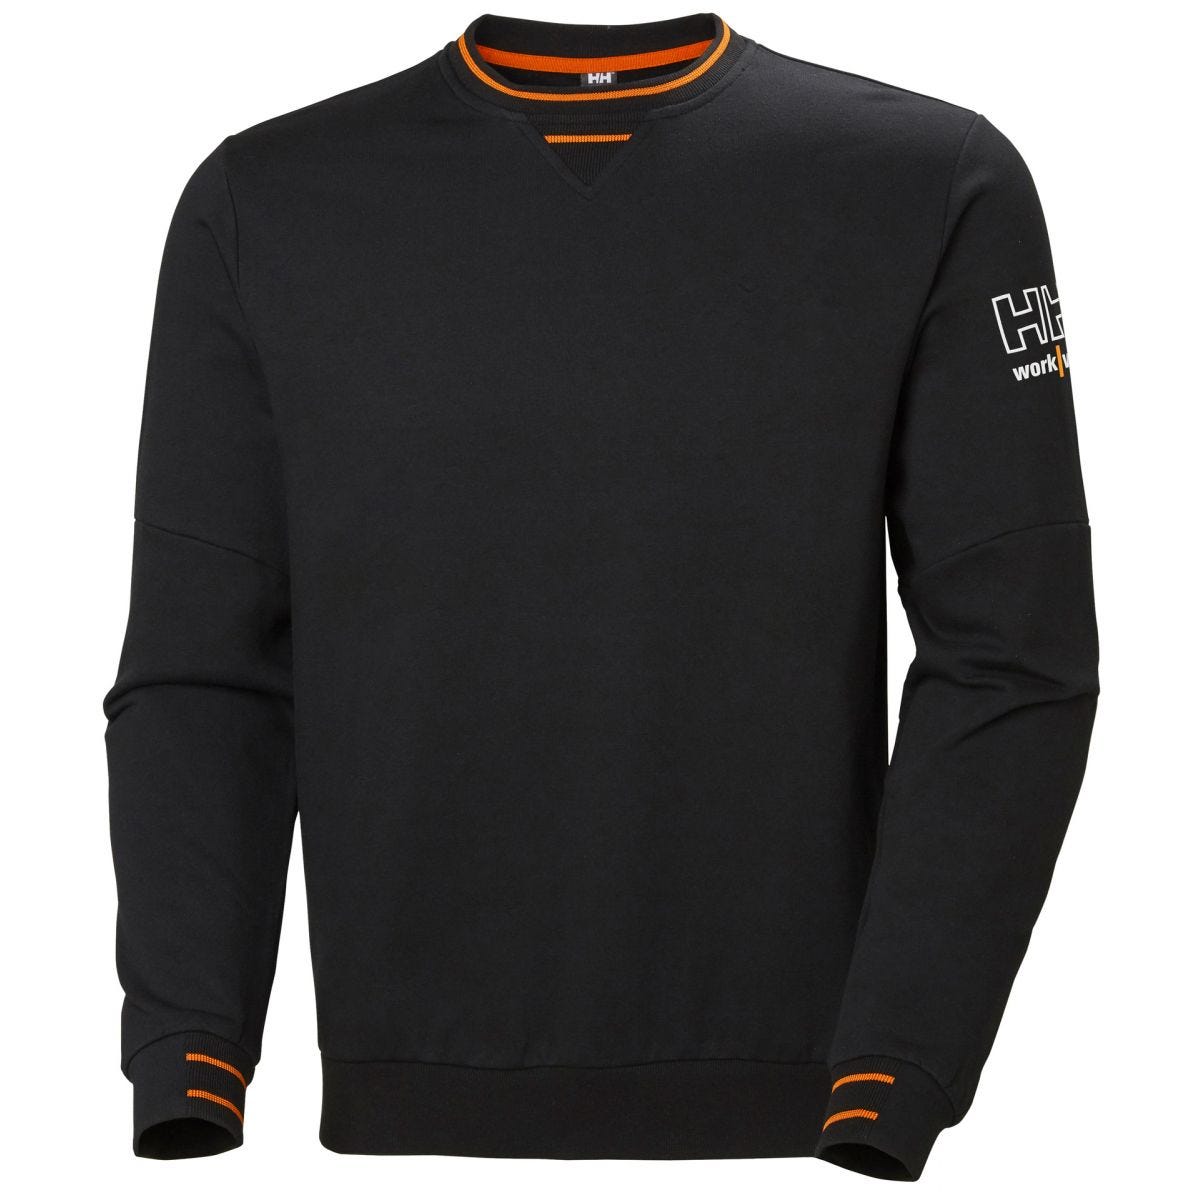 Sweatshirt Kensington Noir - Helly Hansen - Taille M 0